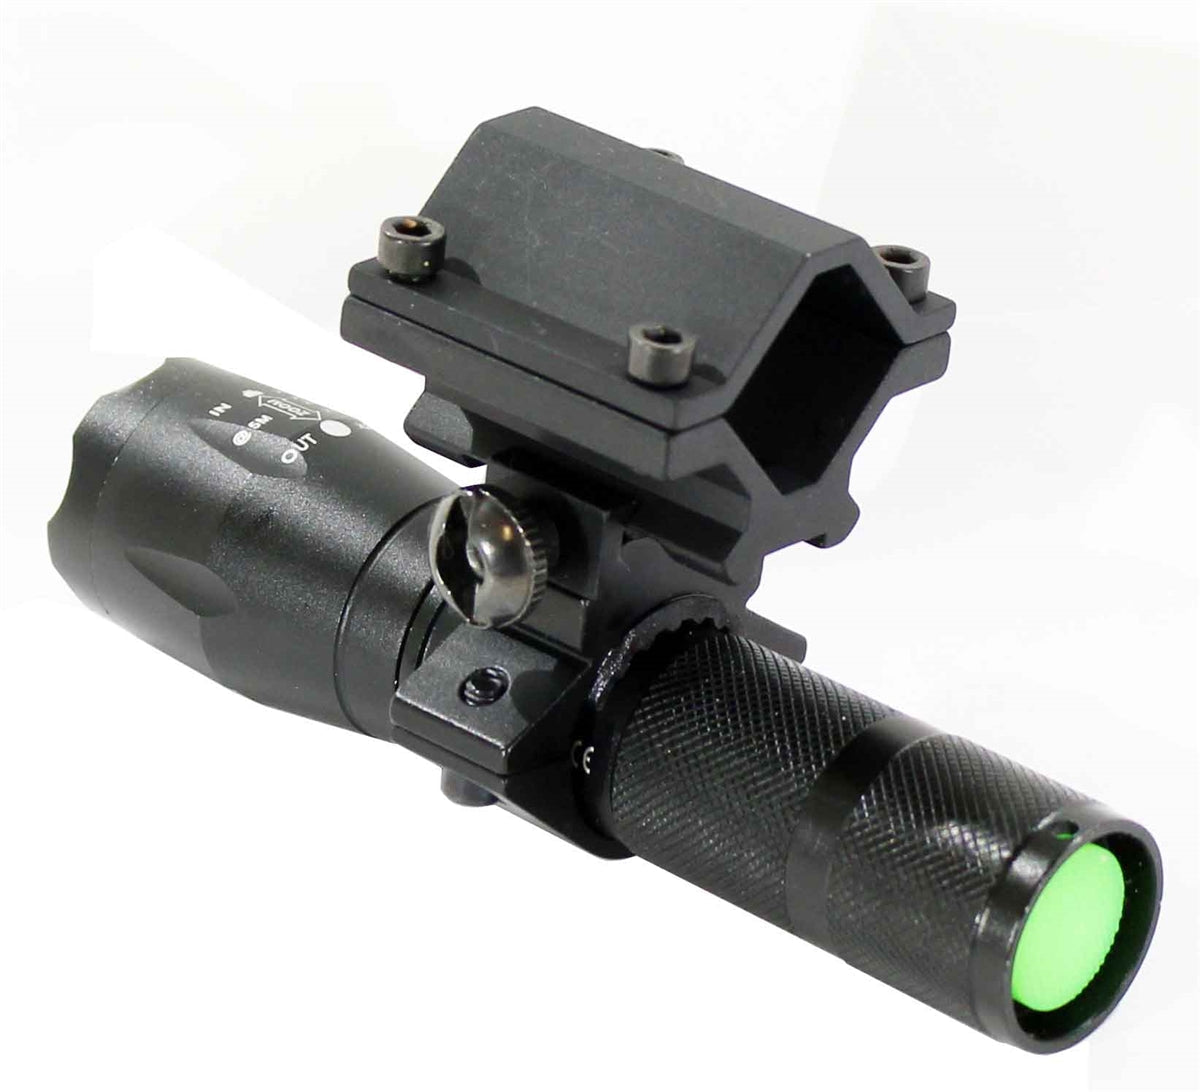 Tactical 1200 Lumen Flashlight With Mount Compatible With Mossberg Maverick 88 20 Gauge Pumps.